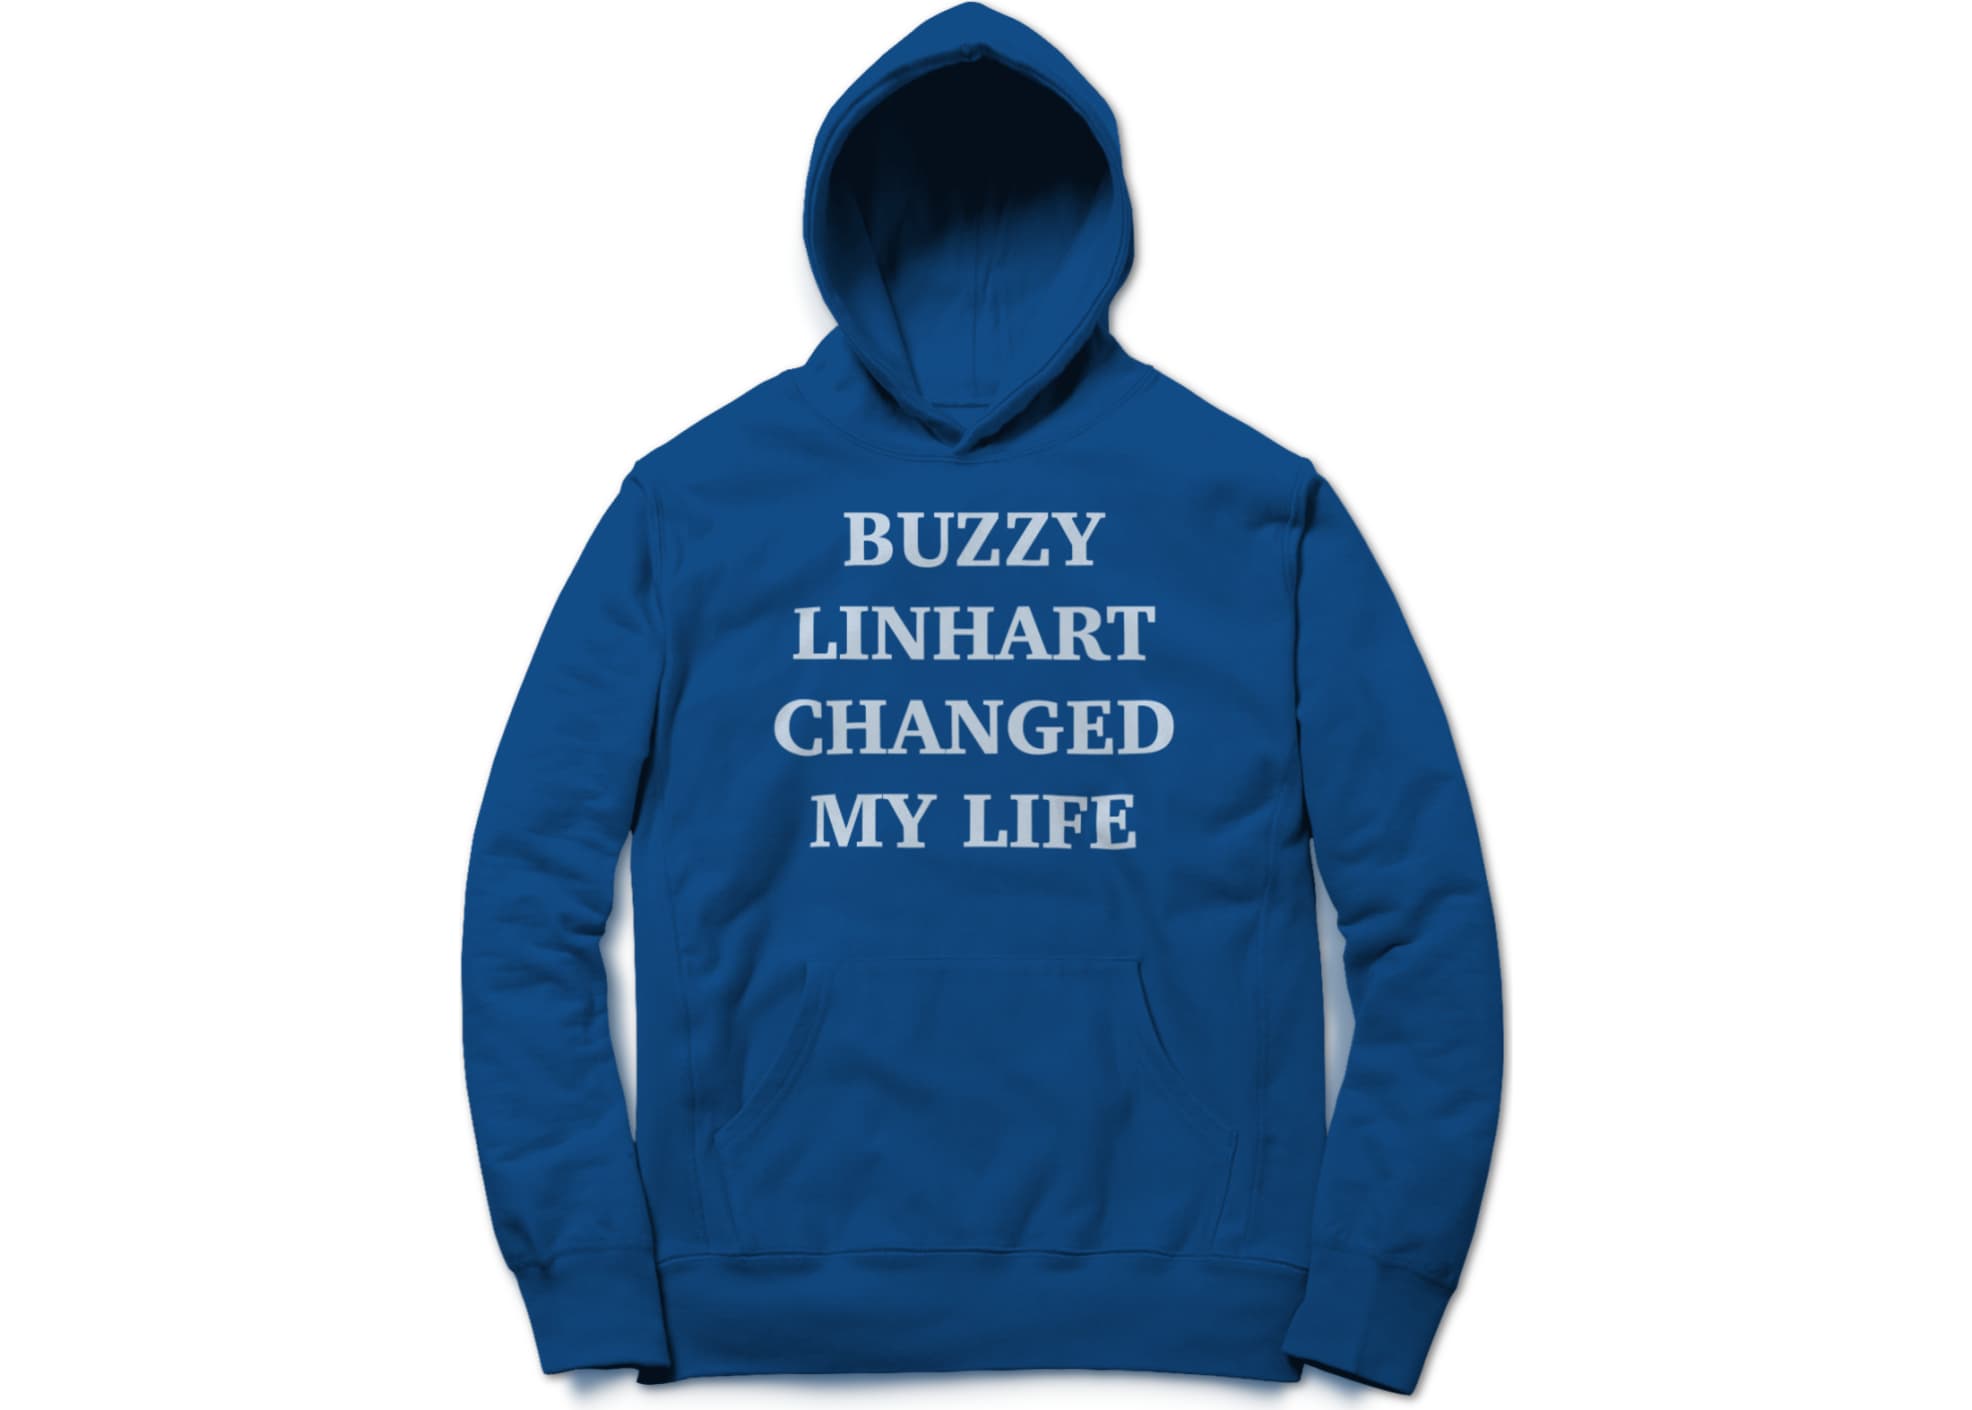 Buzzy linhart buzzy linhart changed my life 1513876054